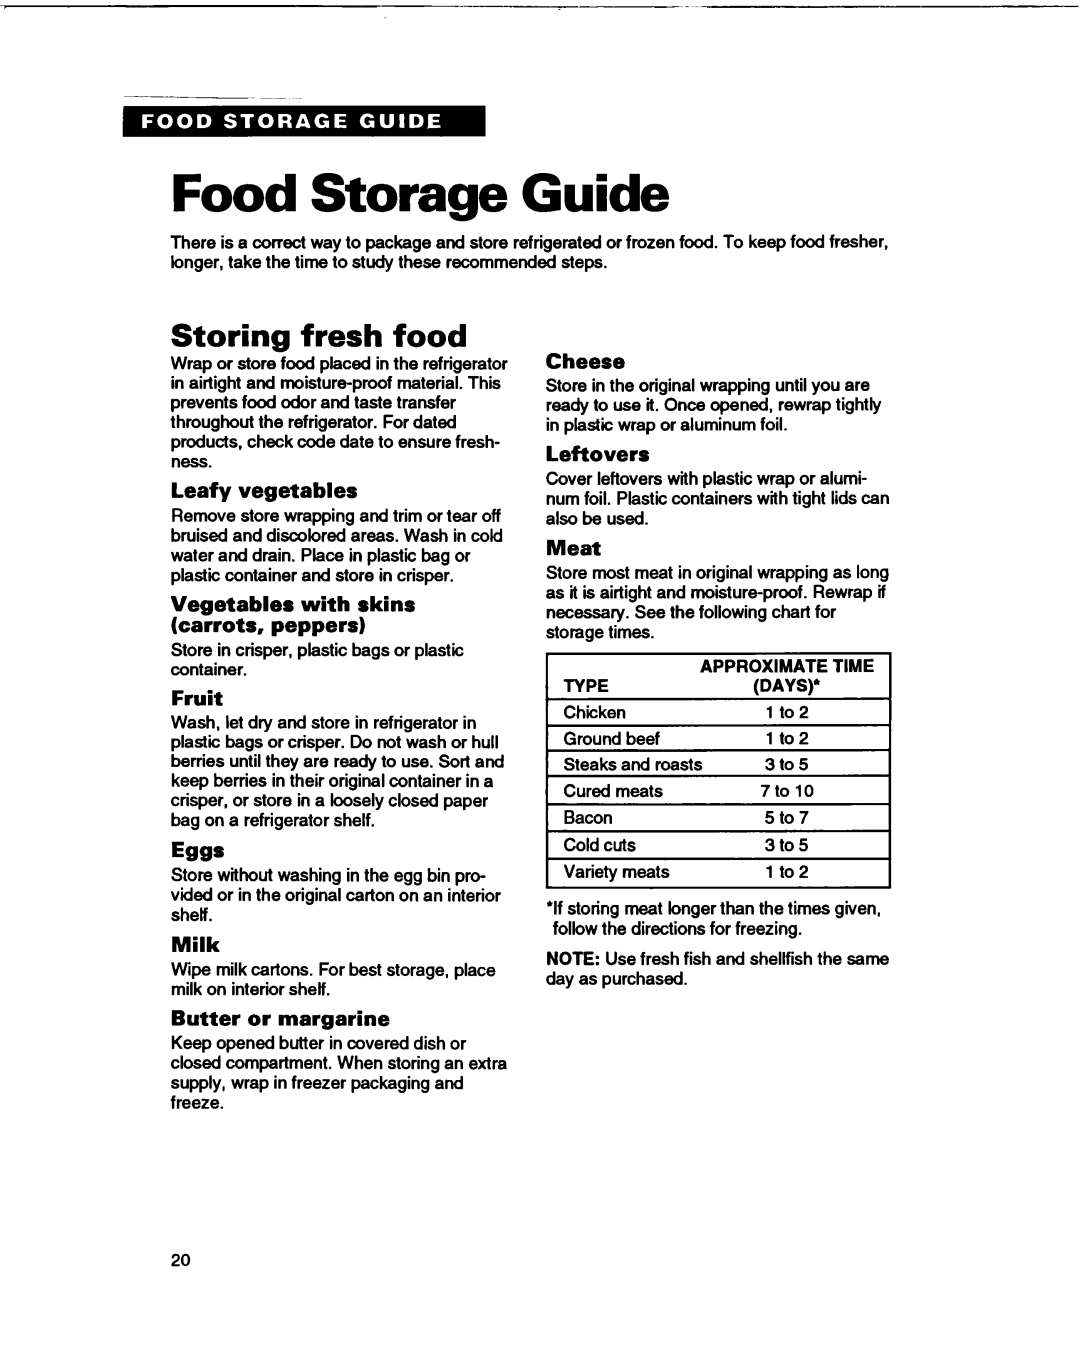 Whirlpool B2lDK Food Storage Guide, Storing fresh food, Leafy vegetables, Vegetables with skins carrots, peppers, Fruit 